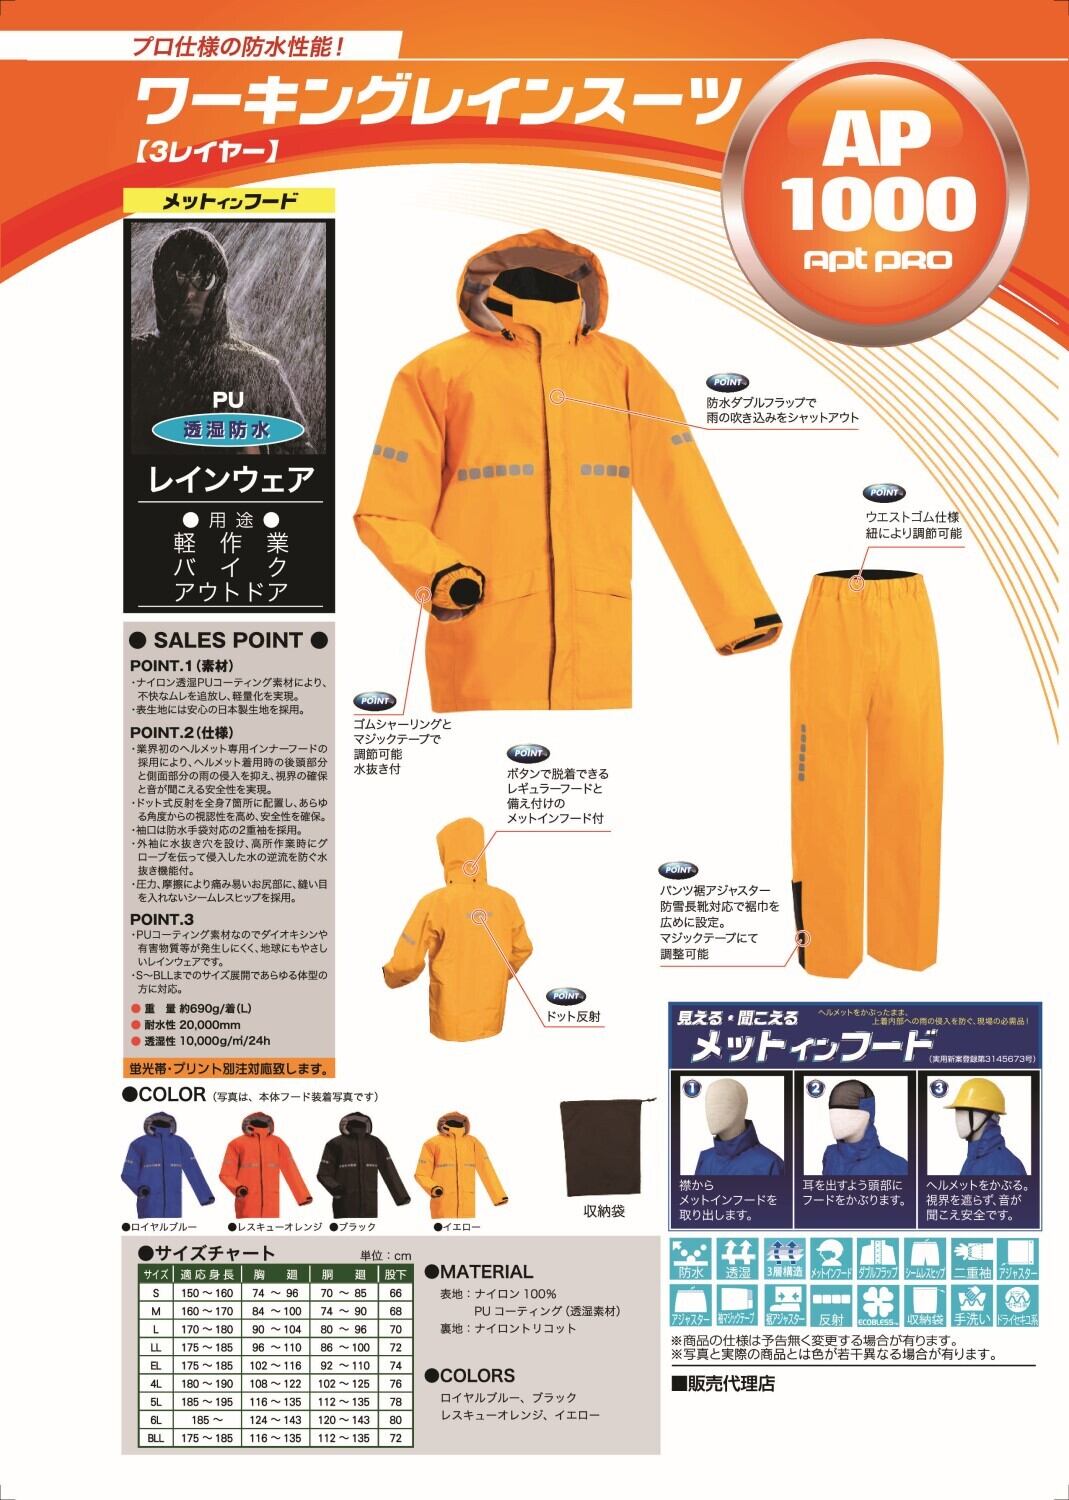 APt PRO] AP1000 ワーキングレインスーツ プロ仕様 作業用 収納袋付き Maegaki Rain Wear Collection